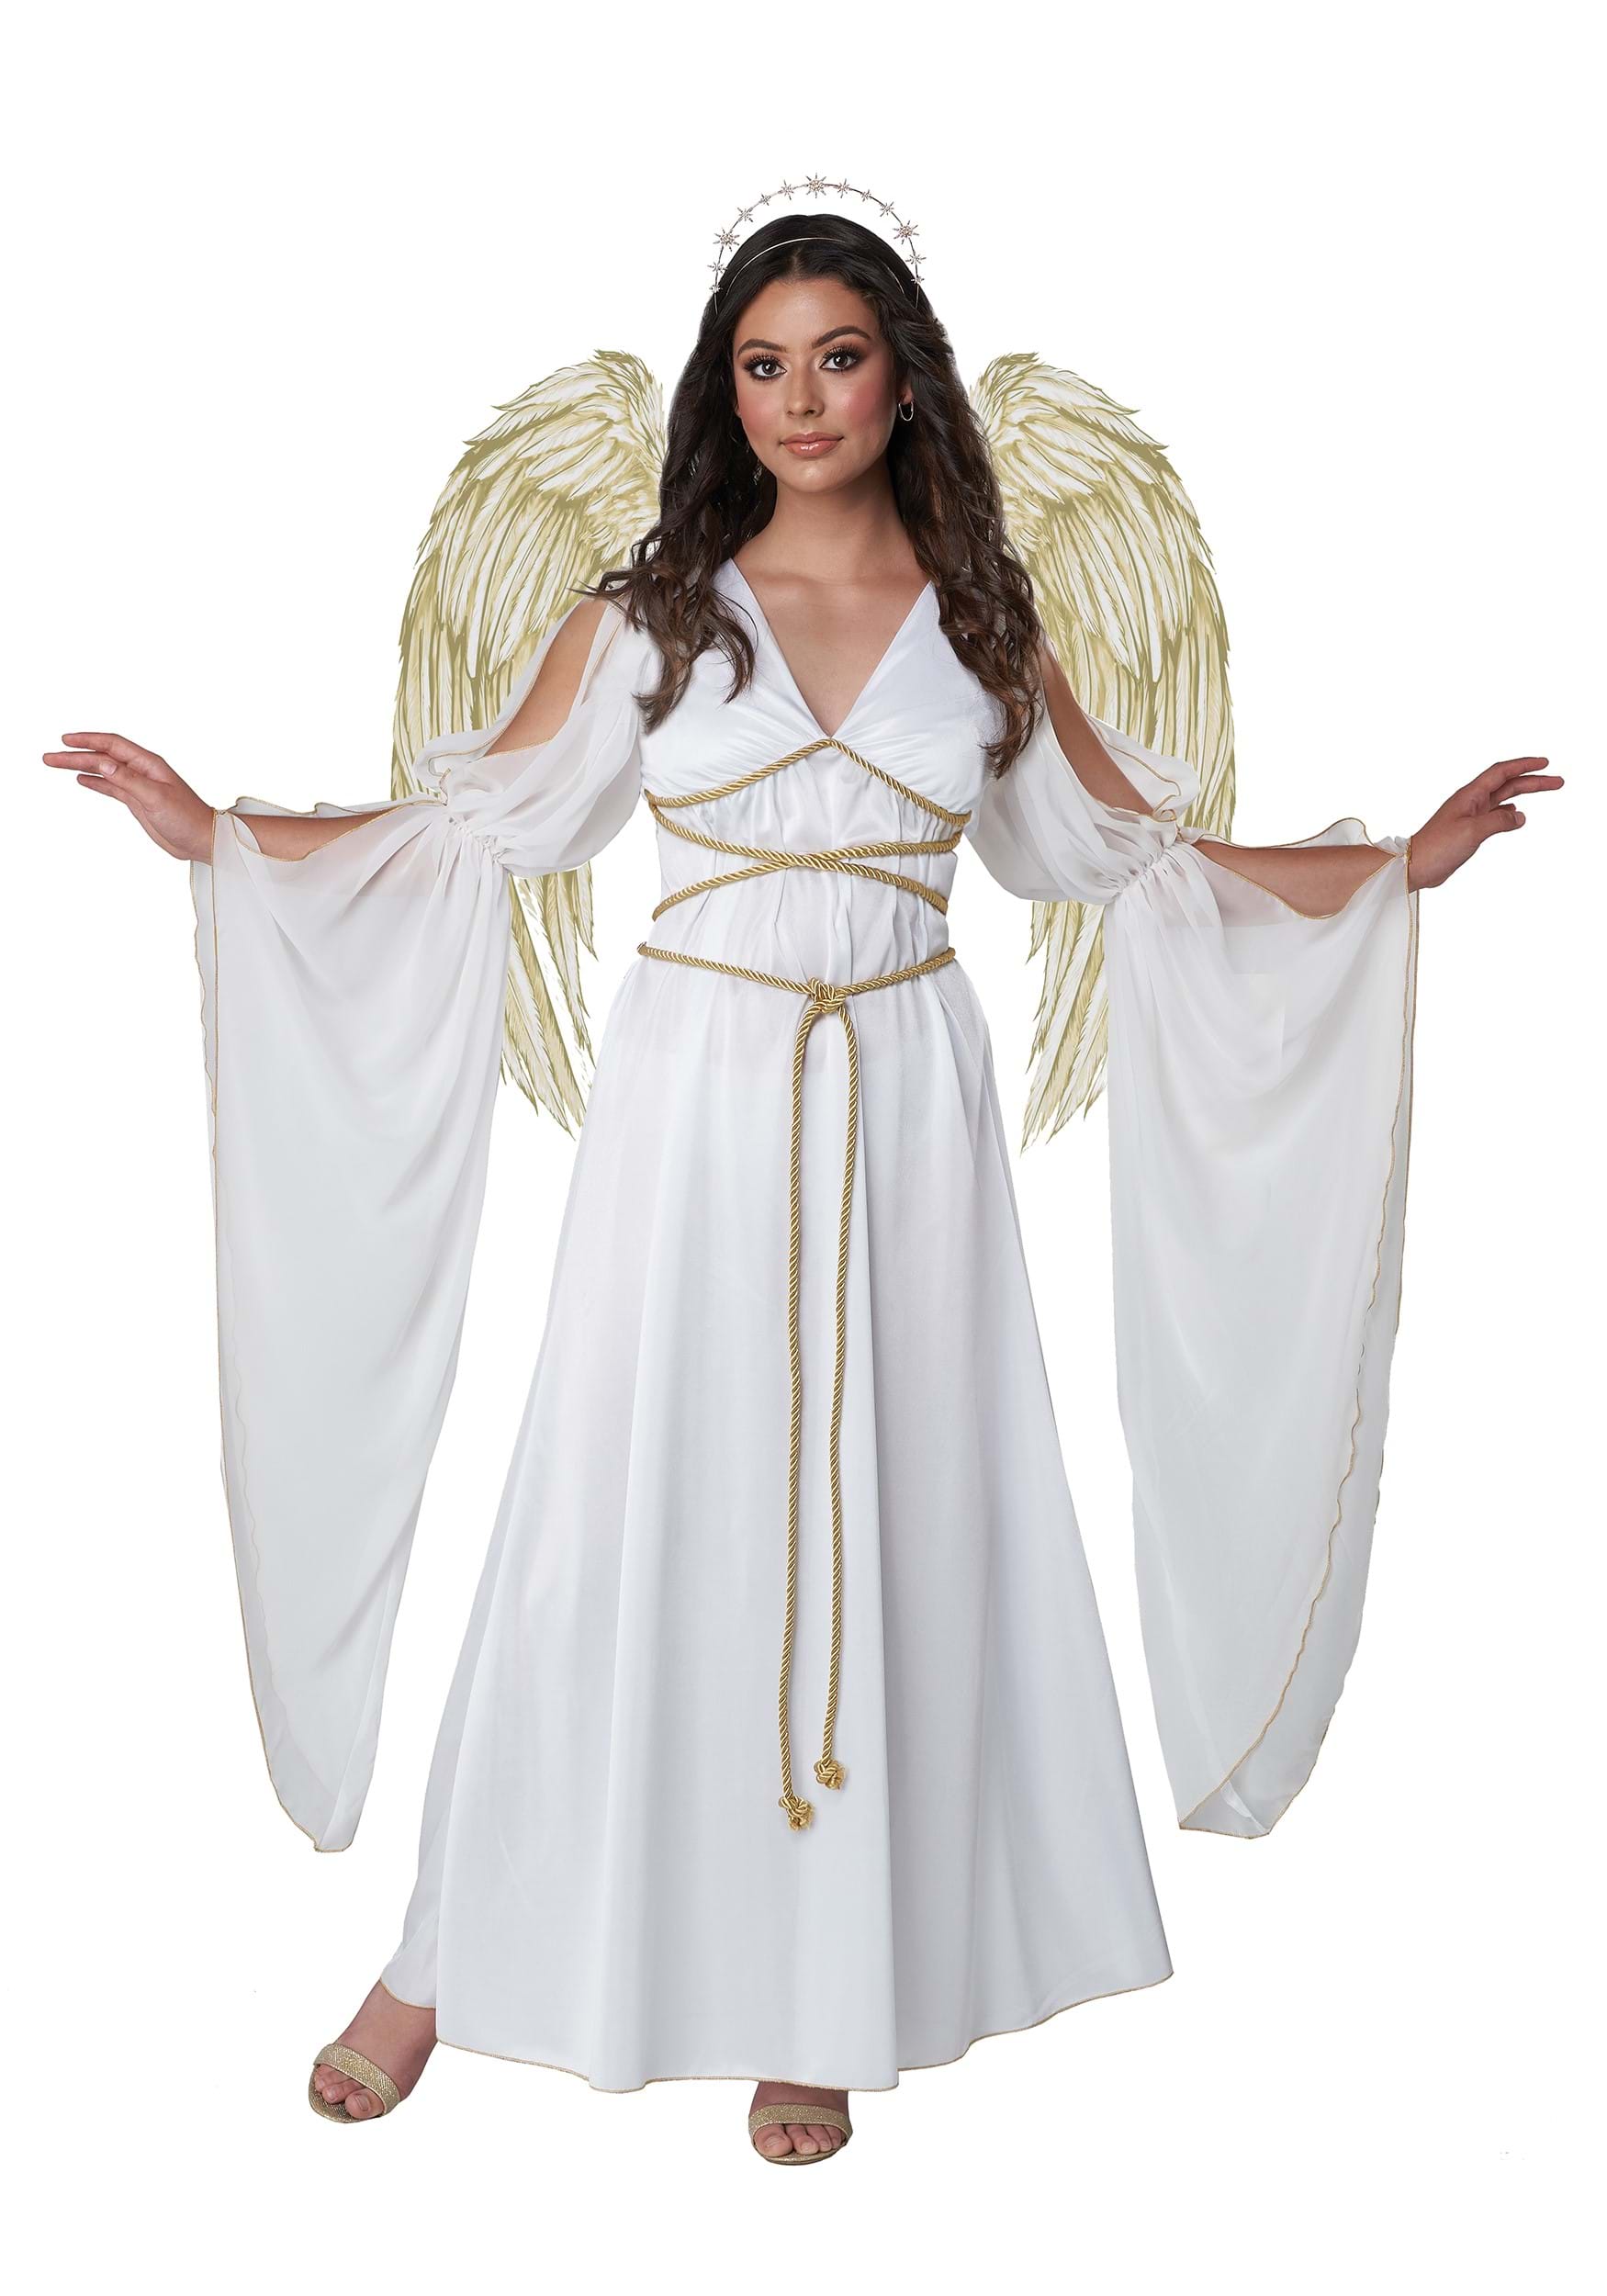 Simply Divine Women's Angel Costume